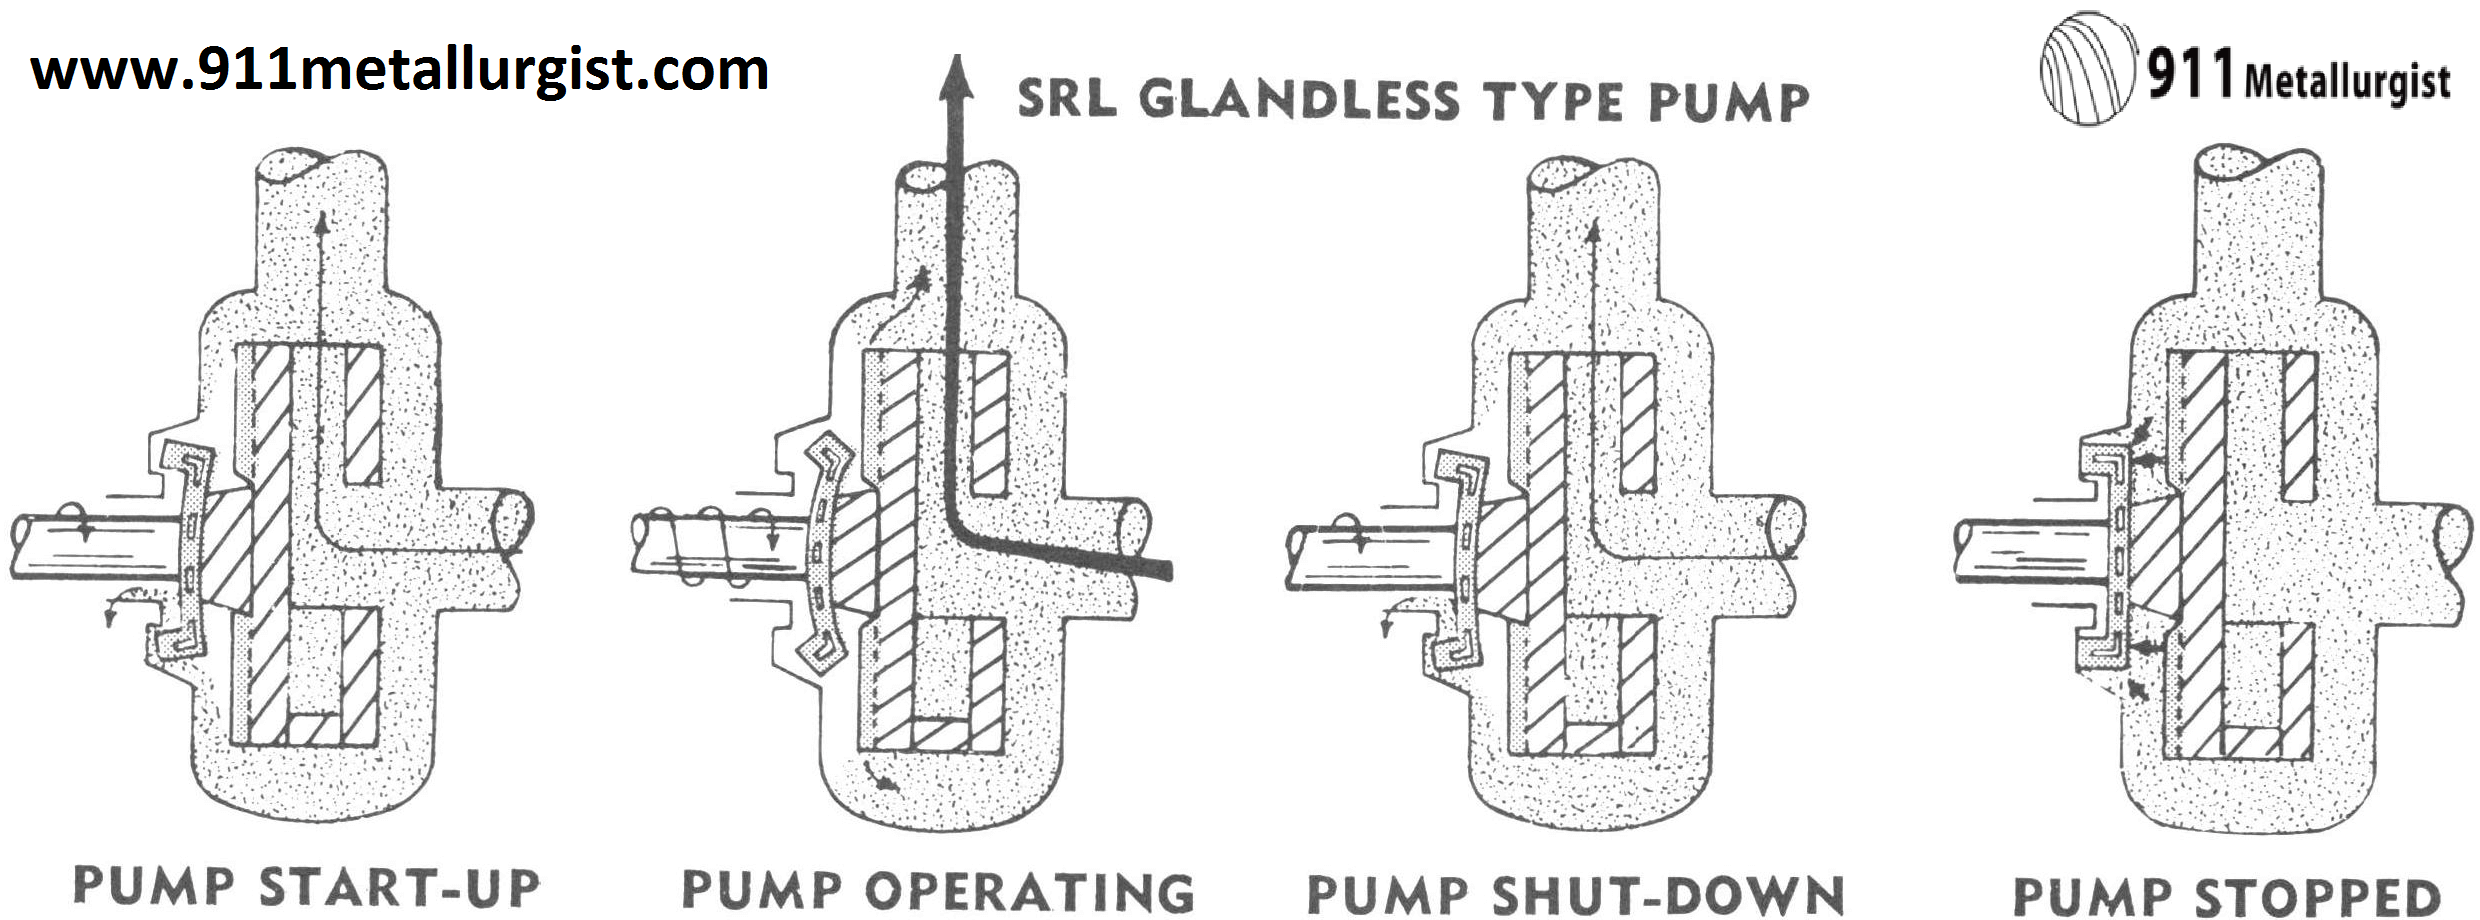 SRL Glandless Tyre Pump